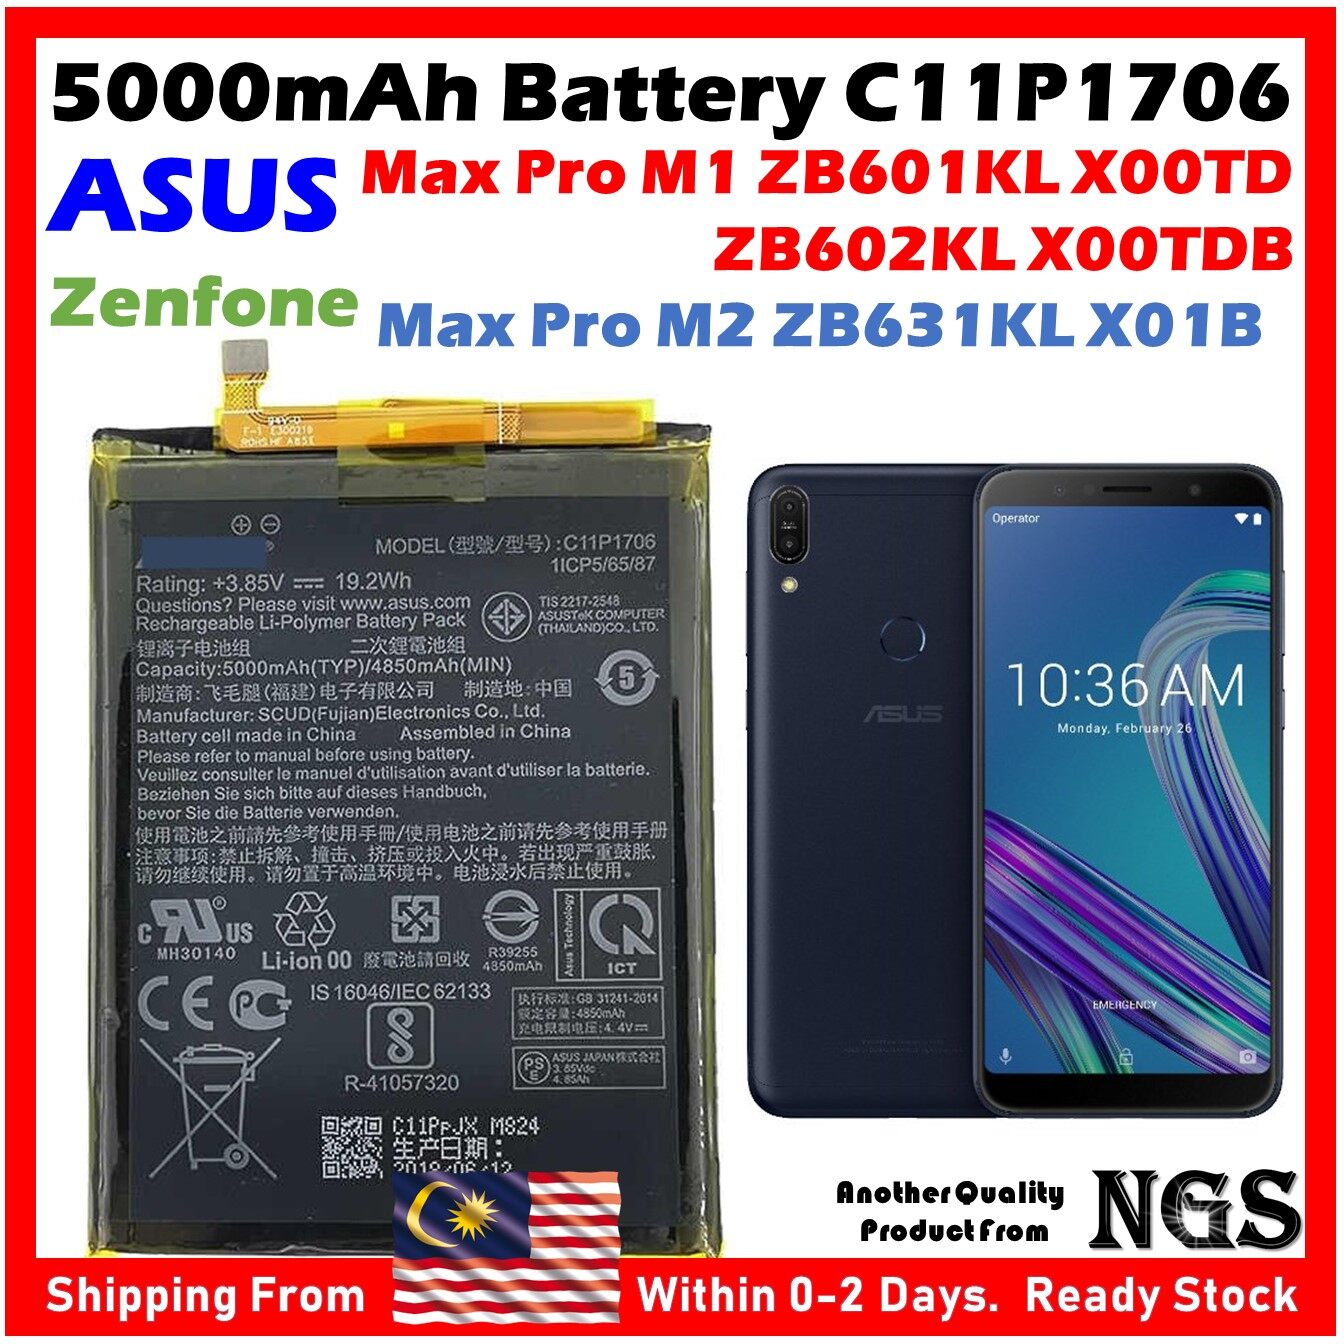 ORIGINAL 5000mAh Battery C11P1706 For ASUS Zenfone Max Pro M1 ZB601KL X00TD  ZB602KL X00TDB Zenfone Max Pro M2 ZB631KL X01B with Opening Tools | Lazada